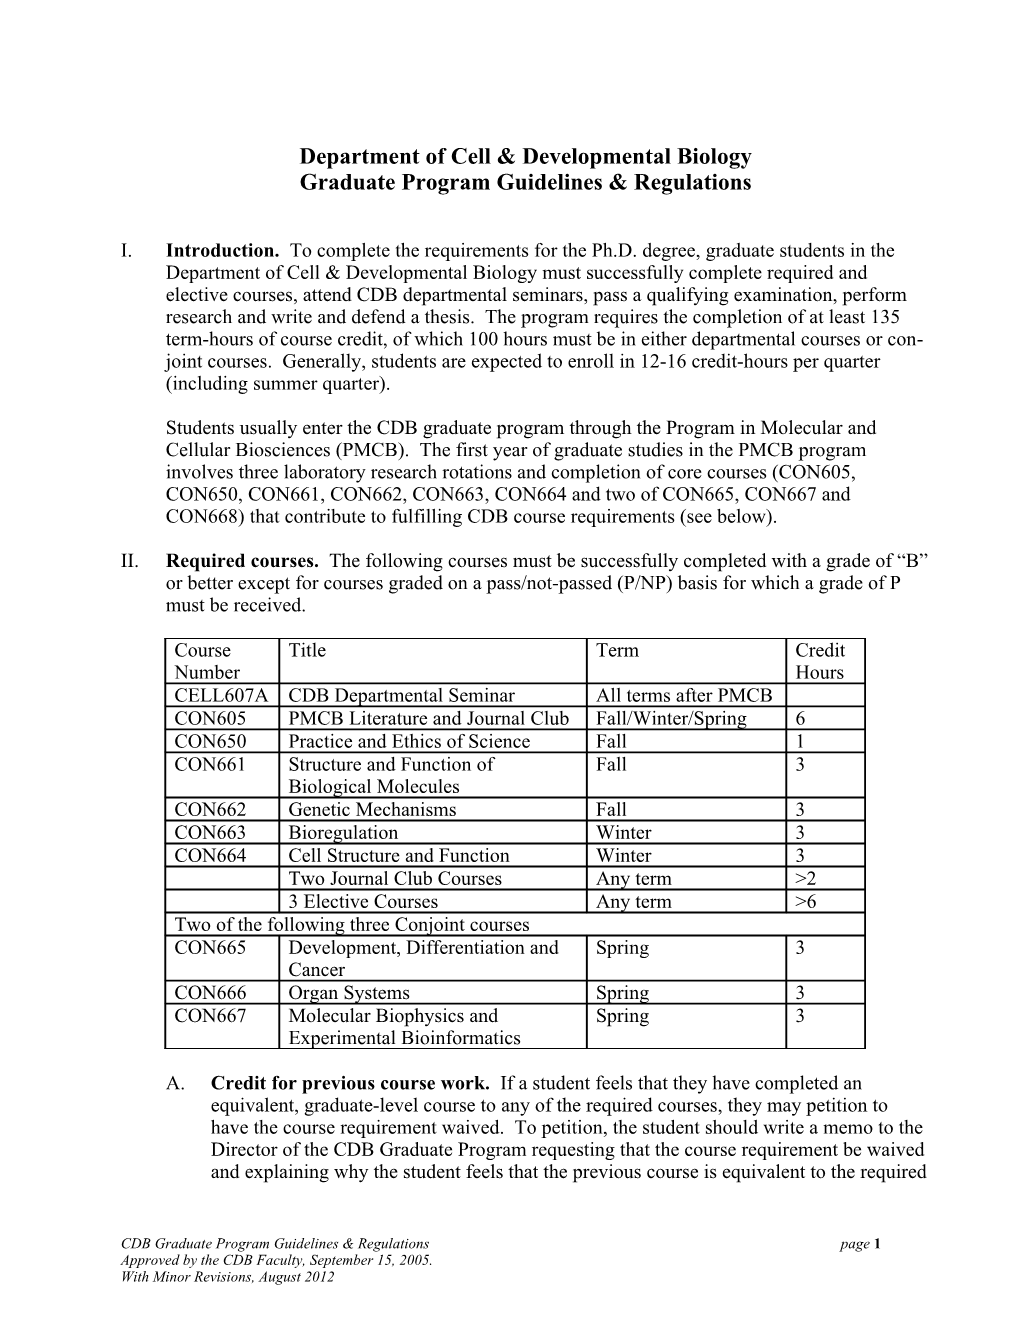 CDB Graduate Program Regulations